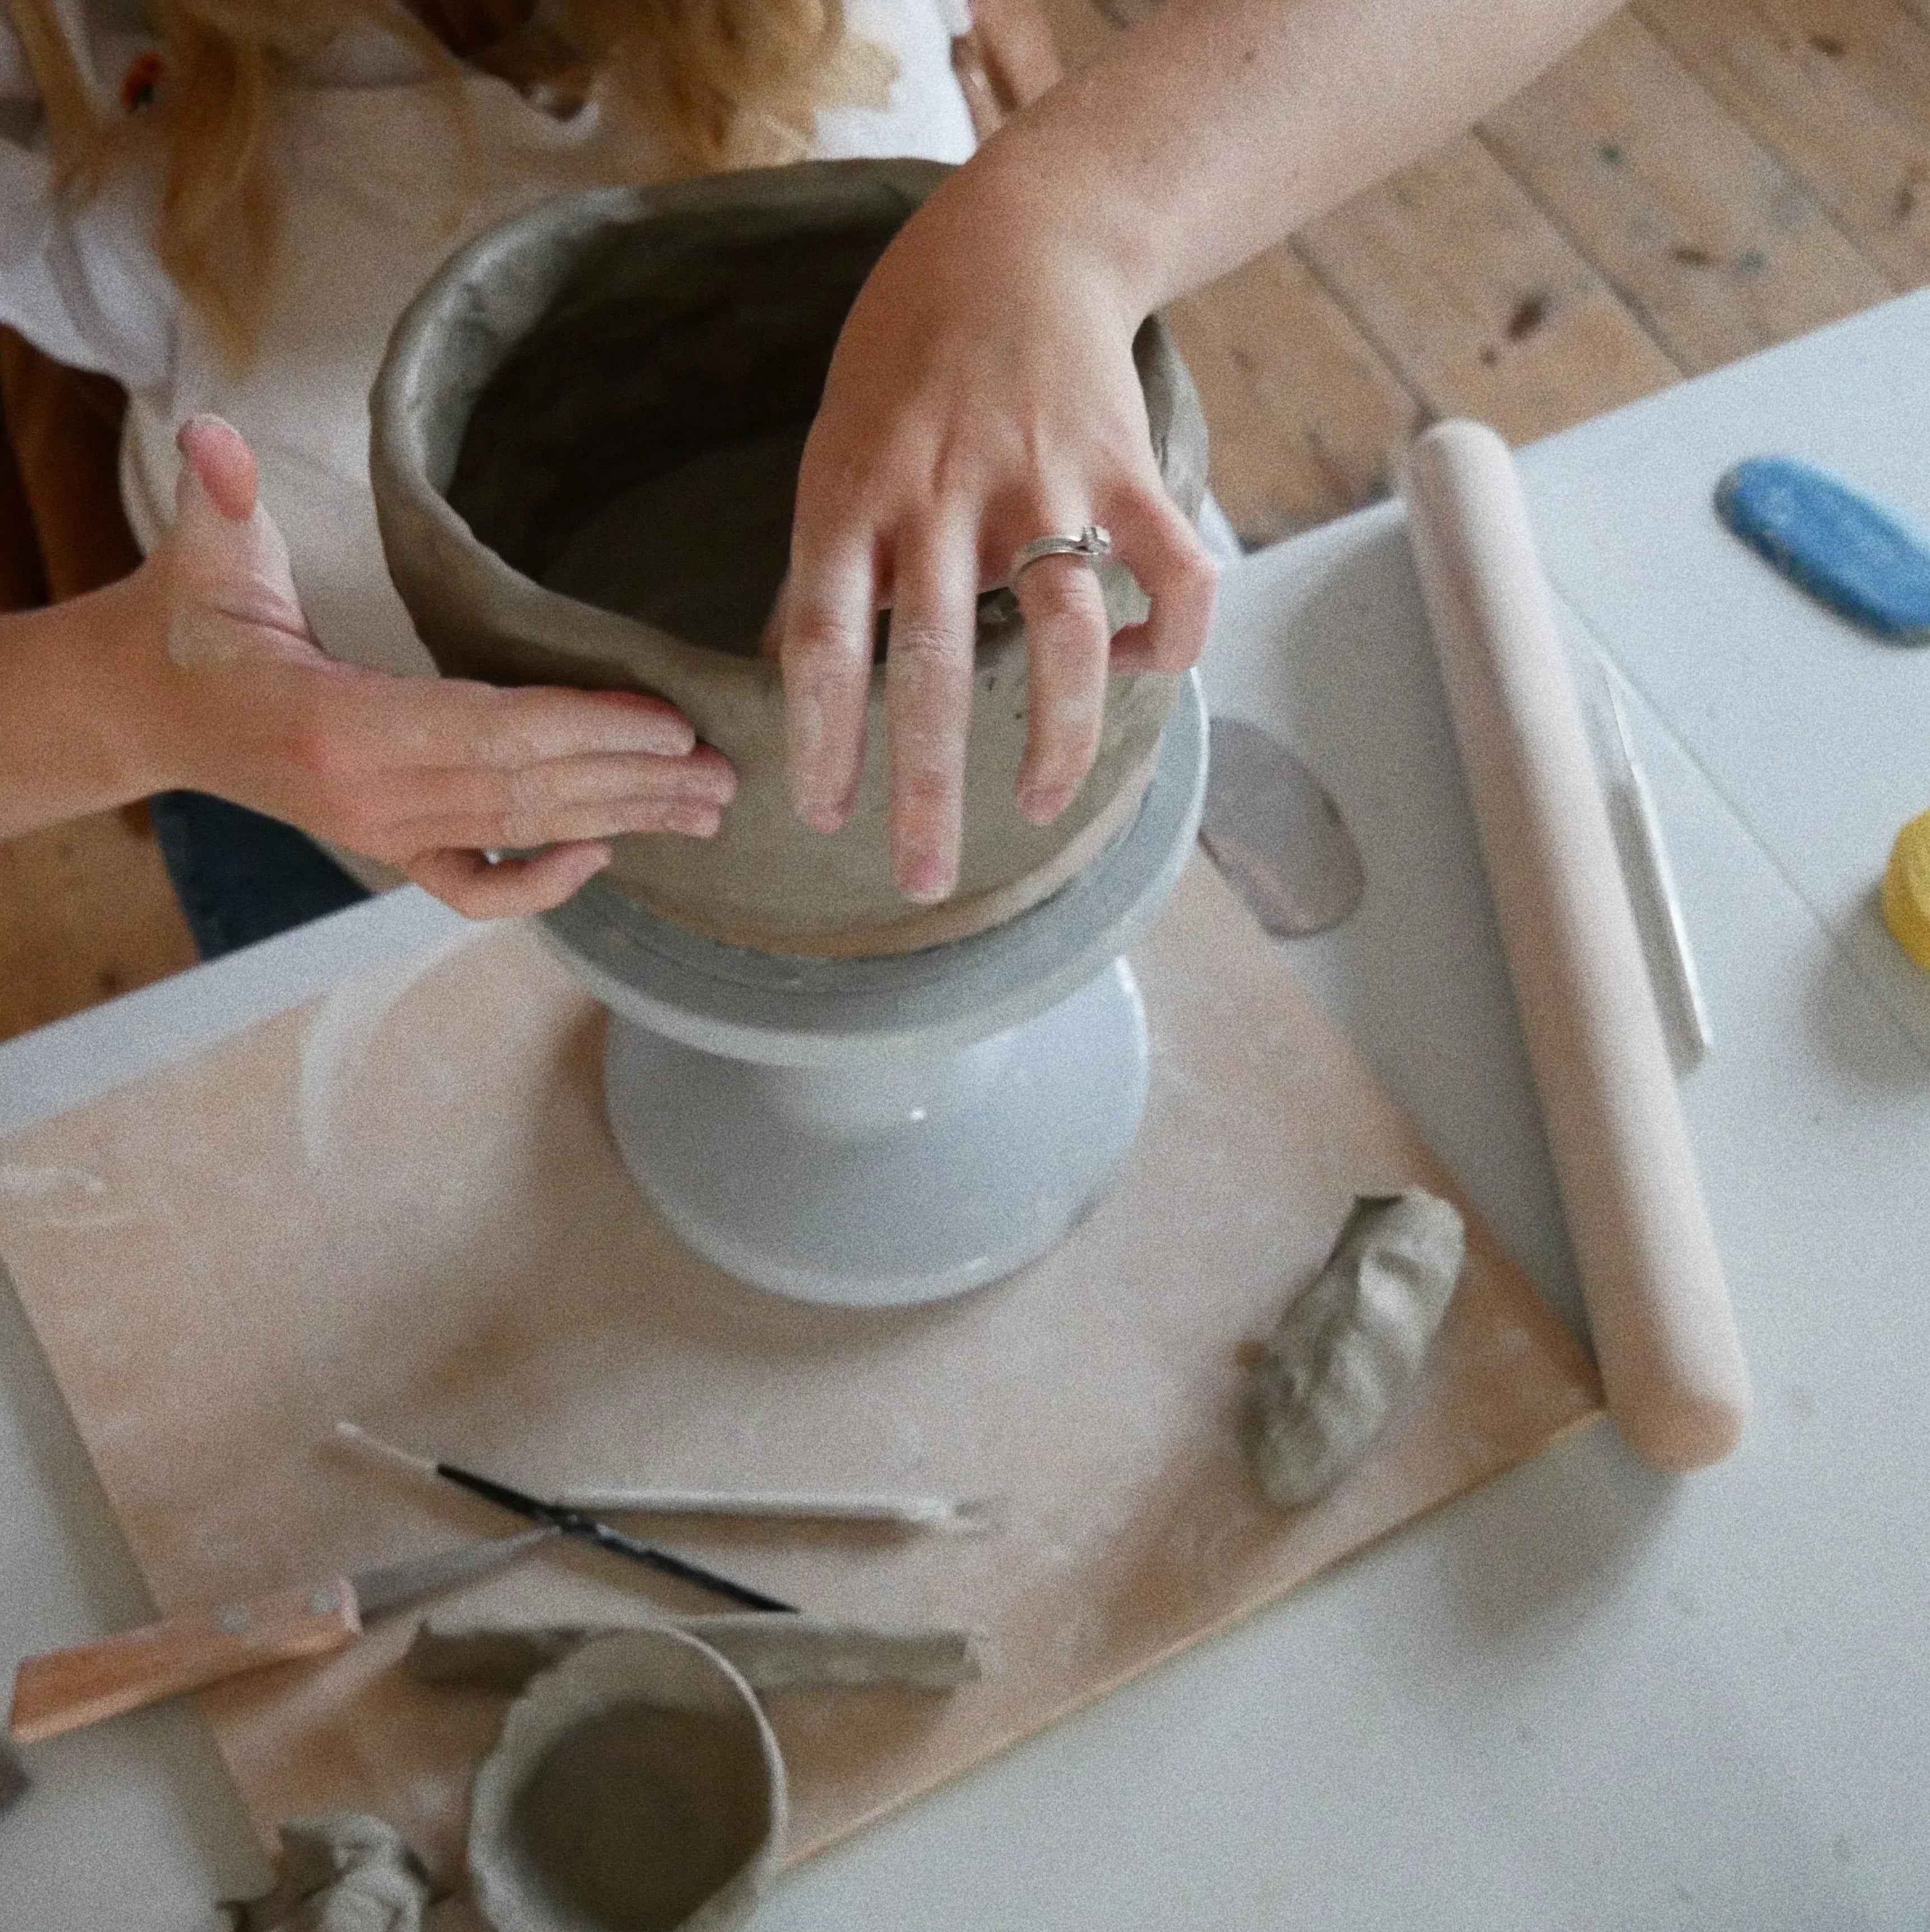 Handbuilding Foundations | 6 Week Course | Ceramics Workshops | October & November 2023